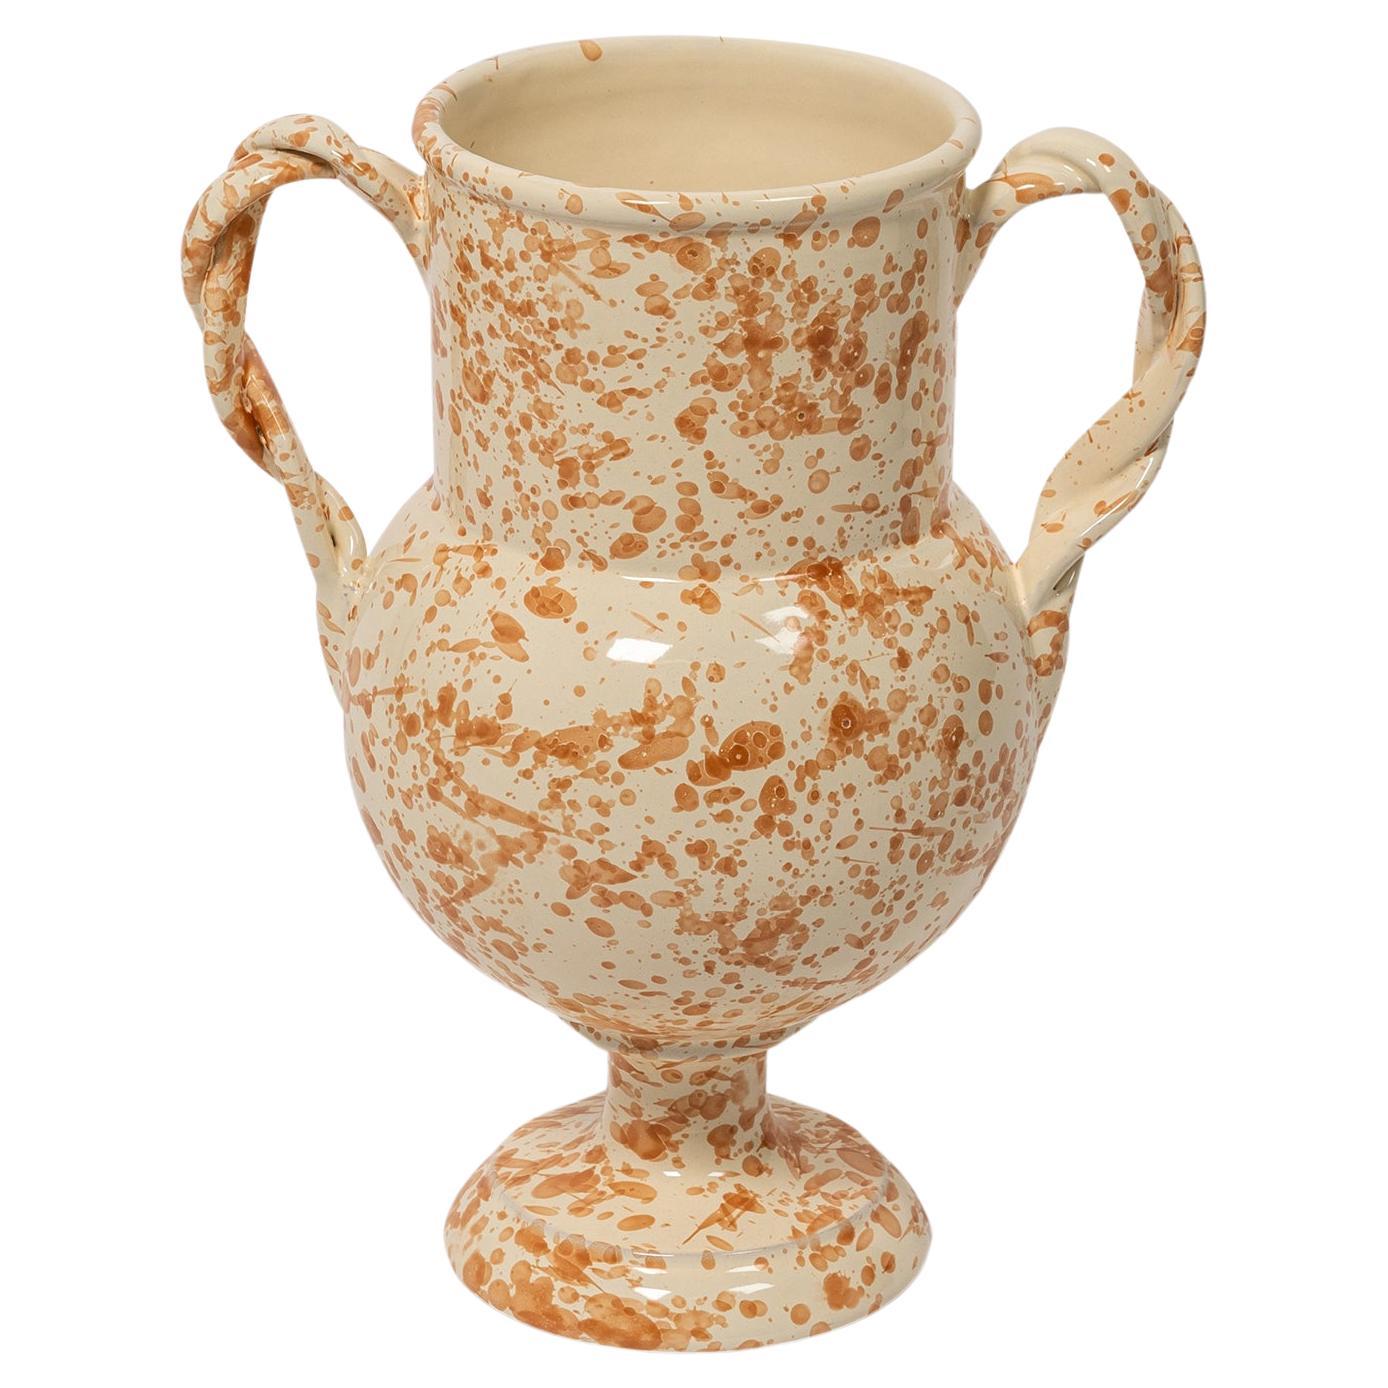 Splatter Vase, ceramic, greek urn inspired, Large, Tan